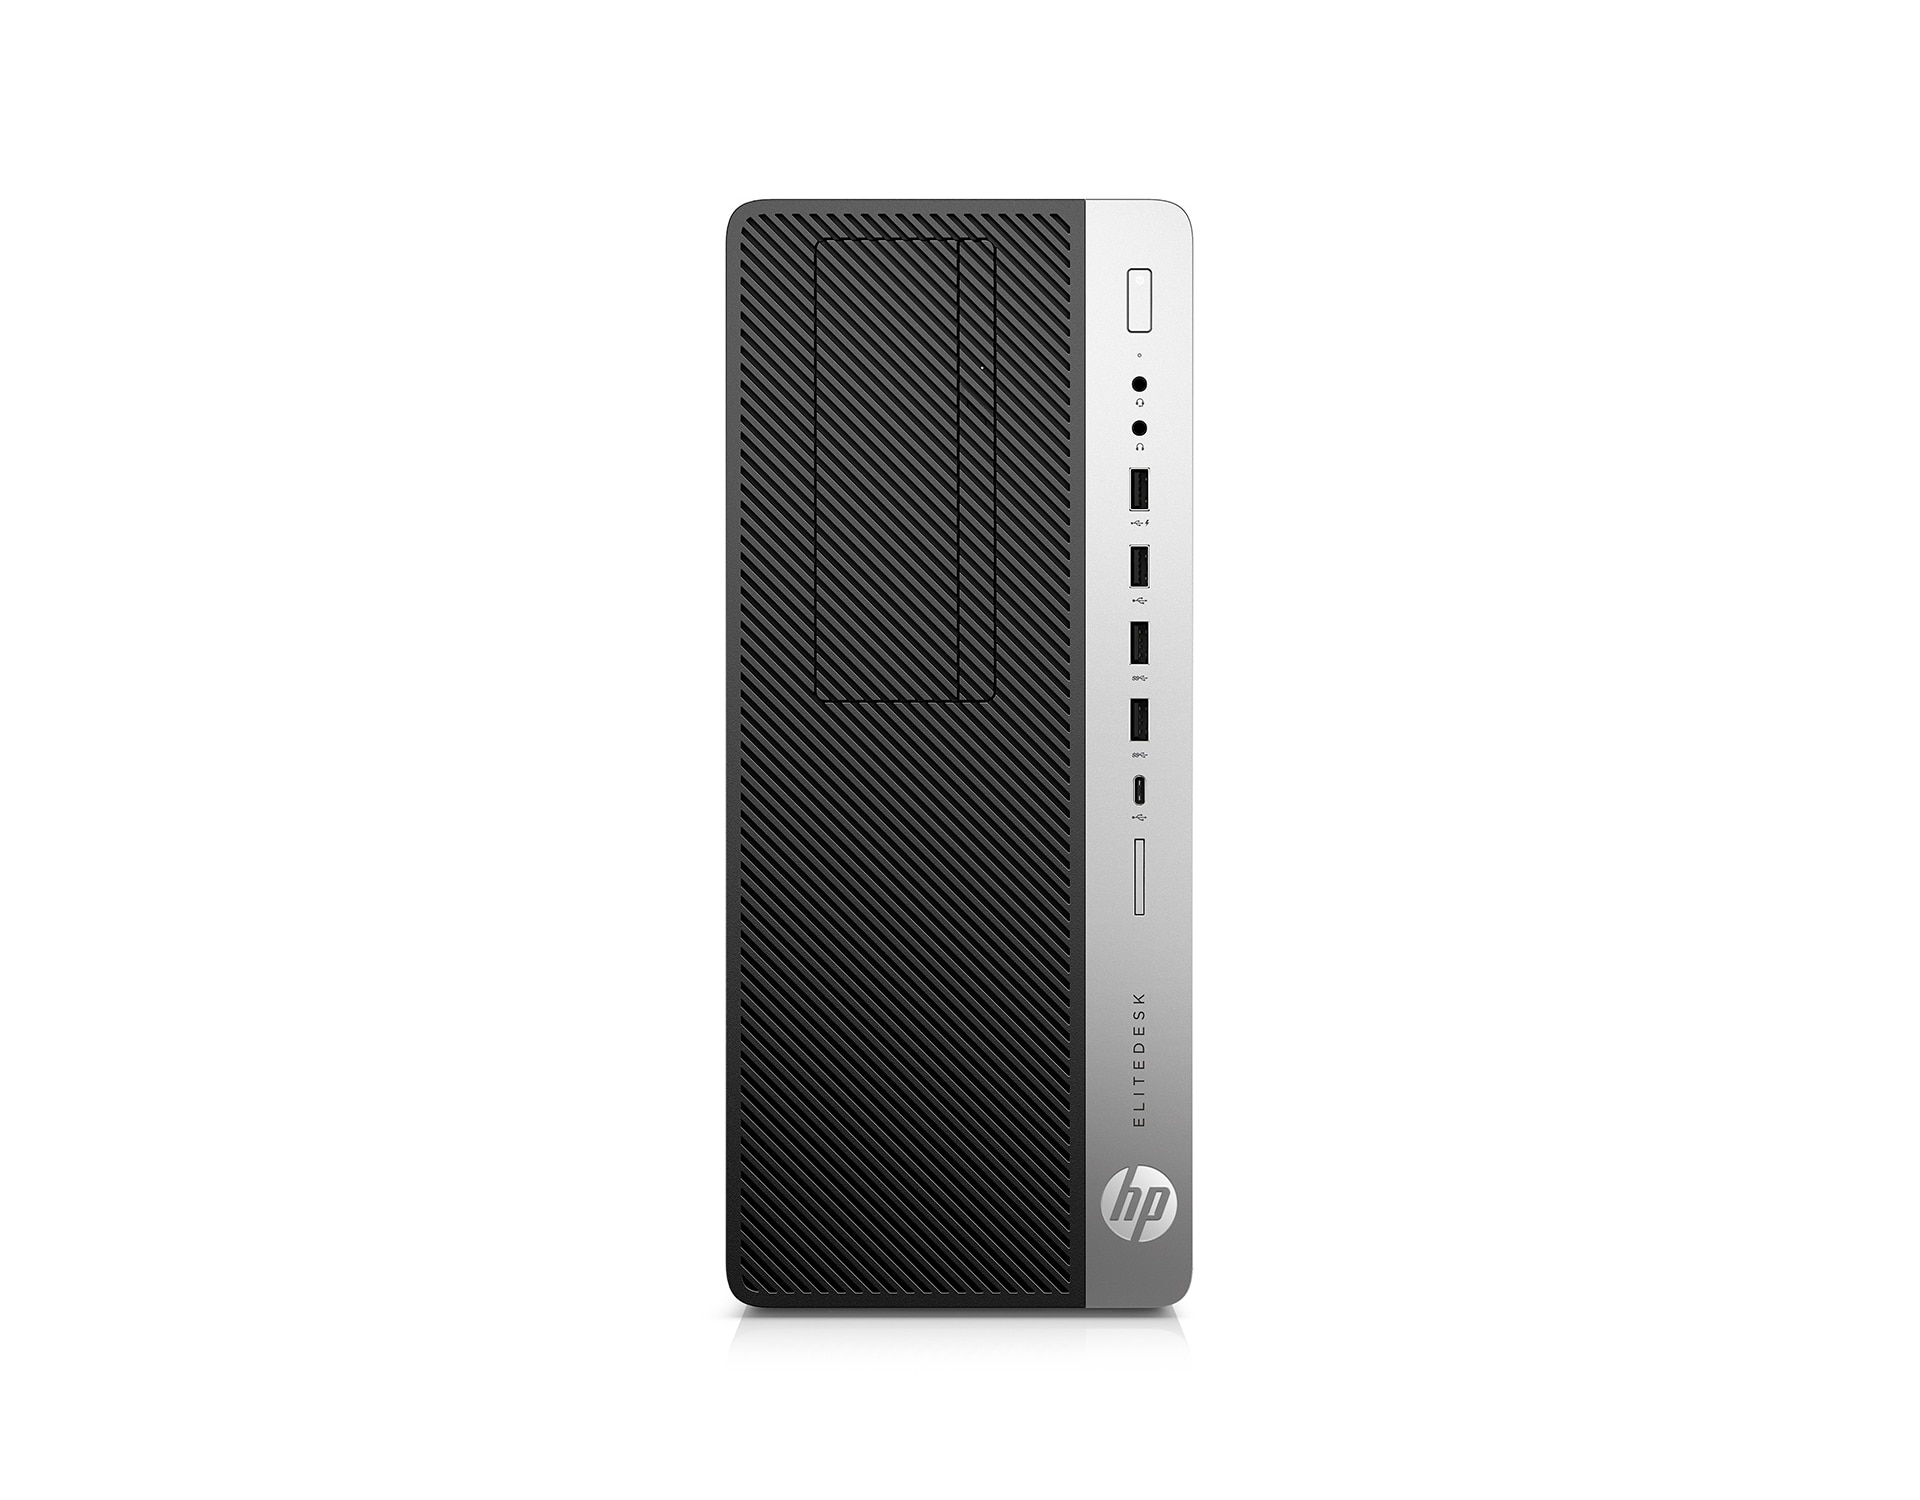 HP EliteDesk 800 G5 TW 東京生産ハイエンド・タワーキャンペーン(HP)激安通販一覧